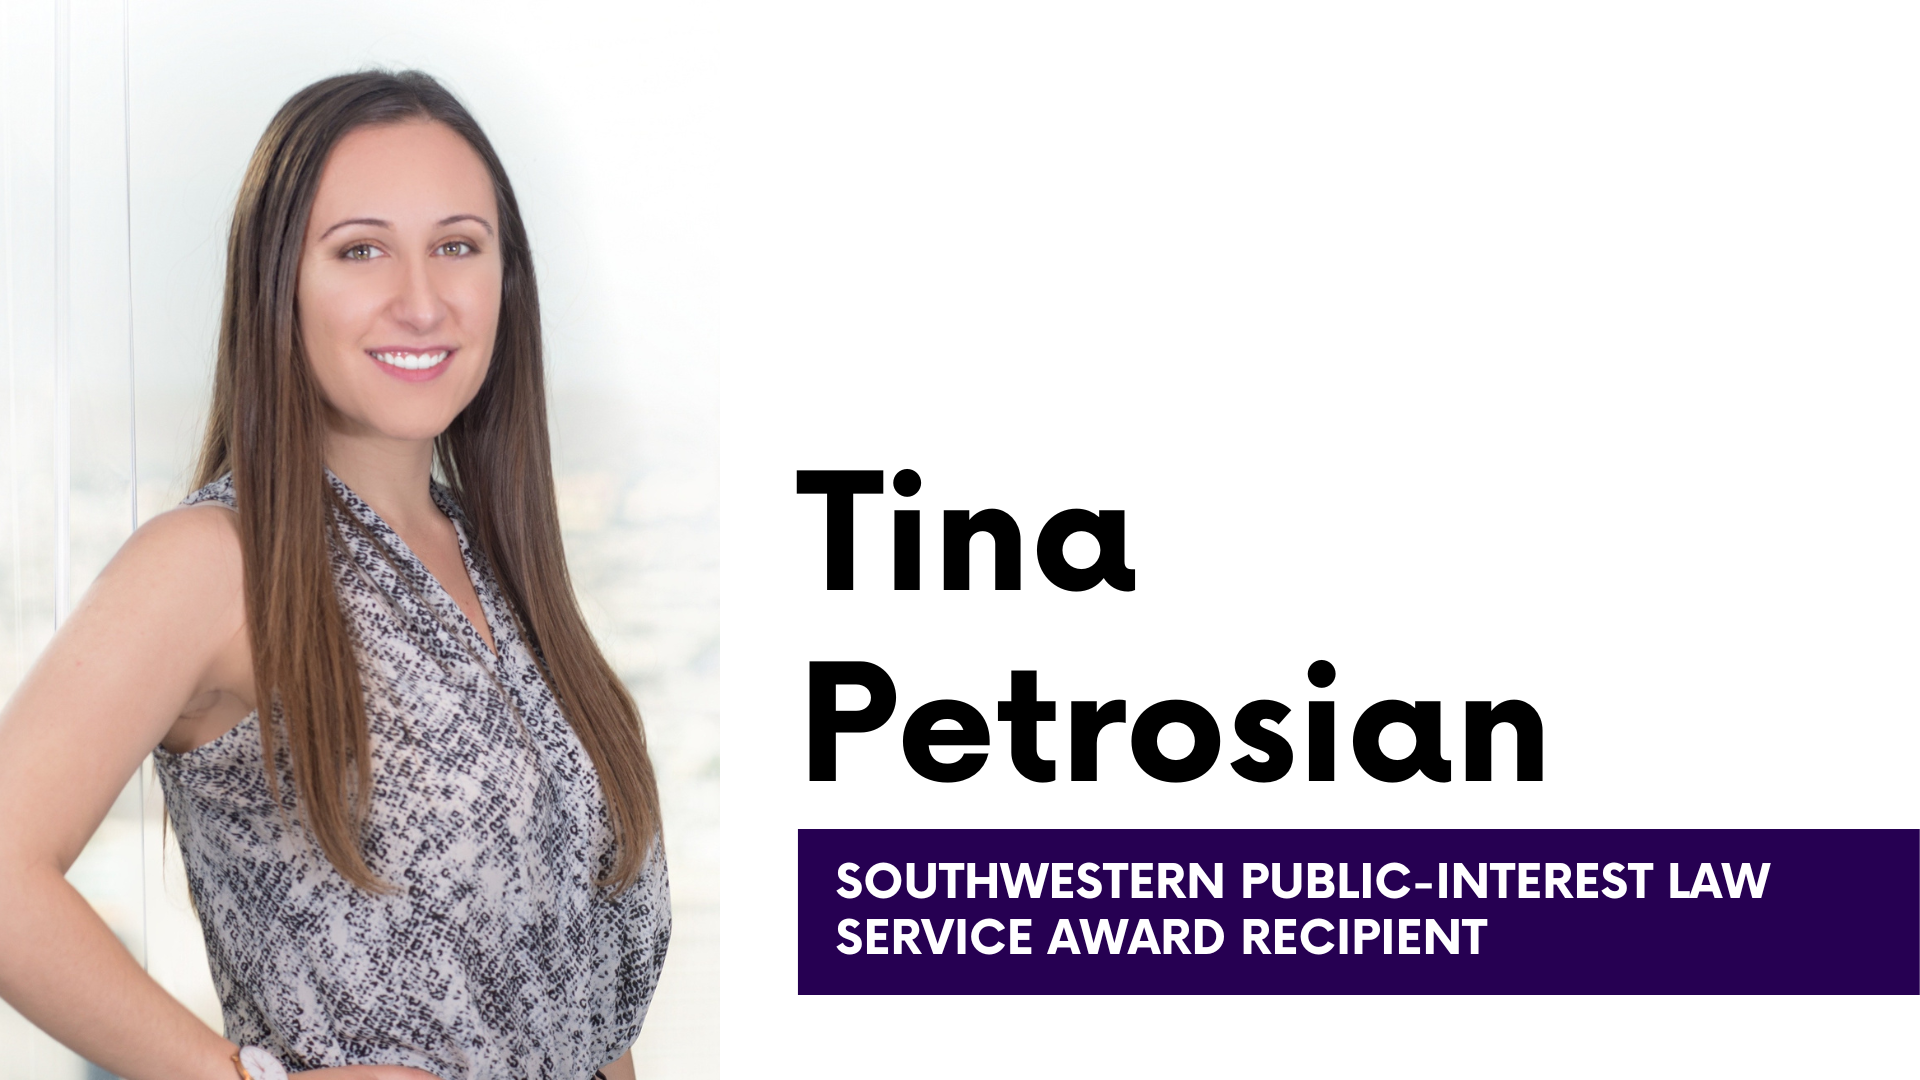 Tina Petrosian headshot with text: Tina Petrosian Southwestern Public-Interest Law Service Award Recipient